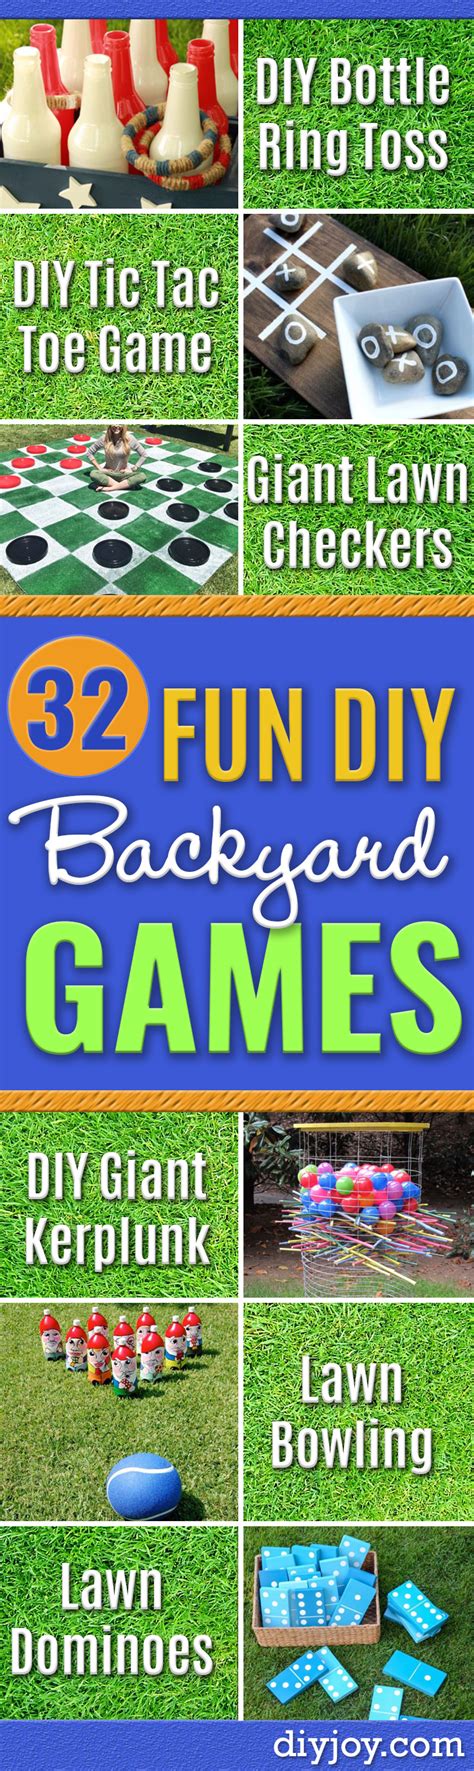 10 fun, wild diy backyard games. 32 DIY Backyard Games That Will Make Summer Even More Awesome!